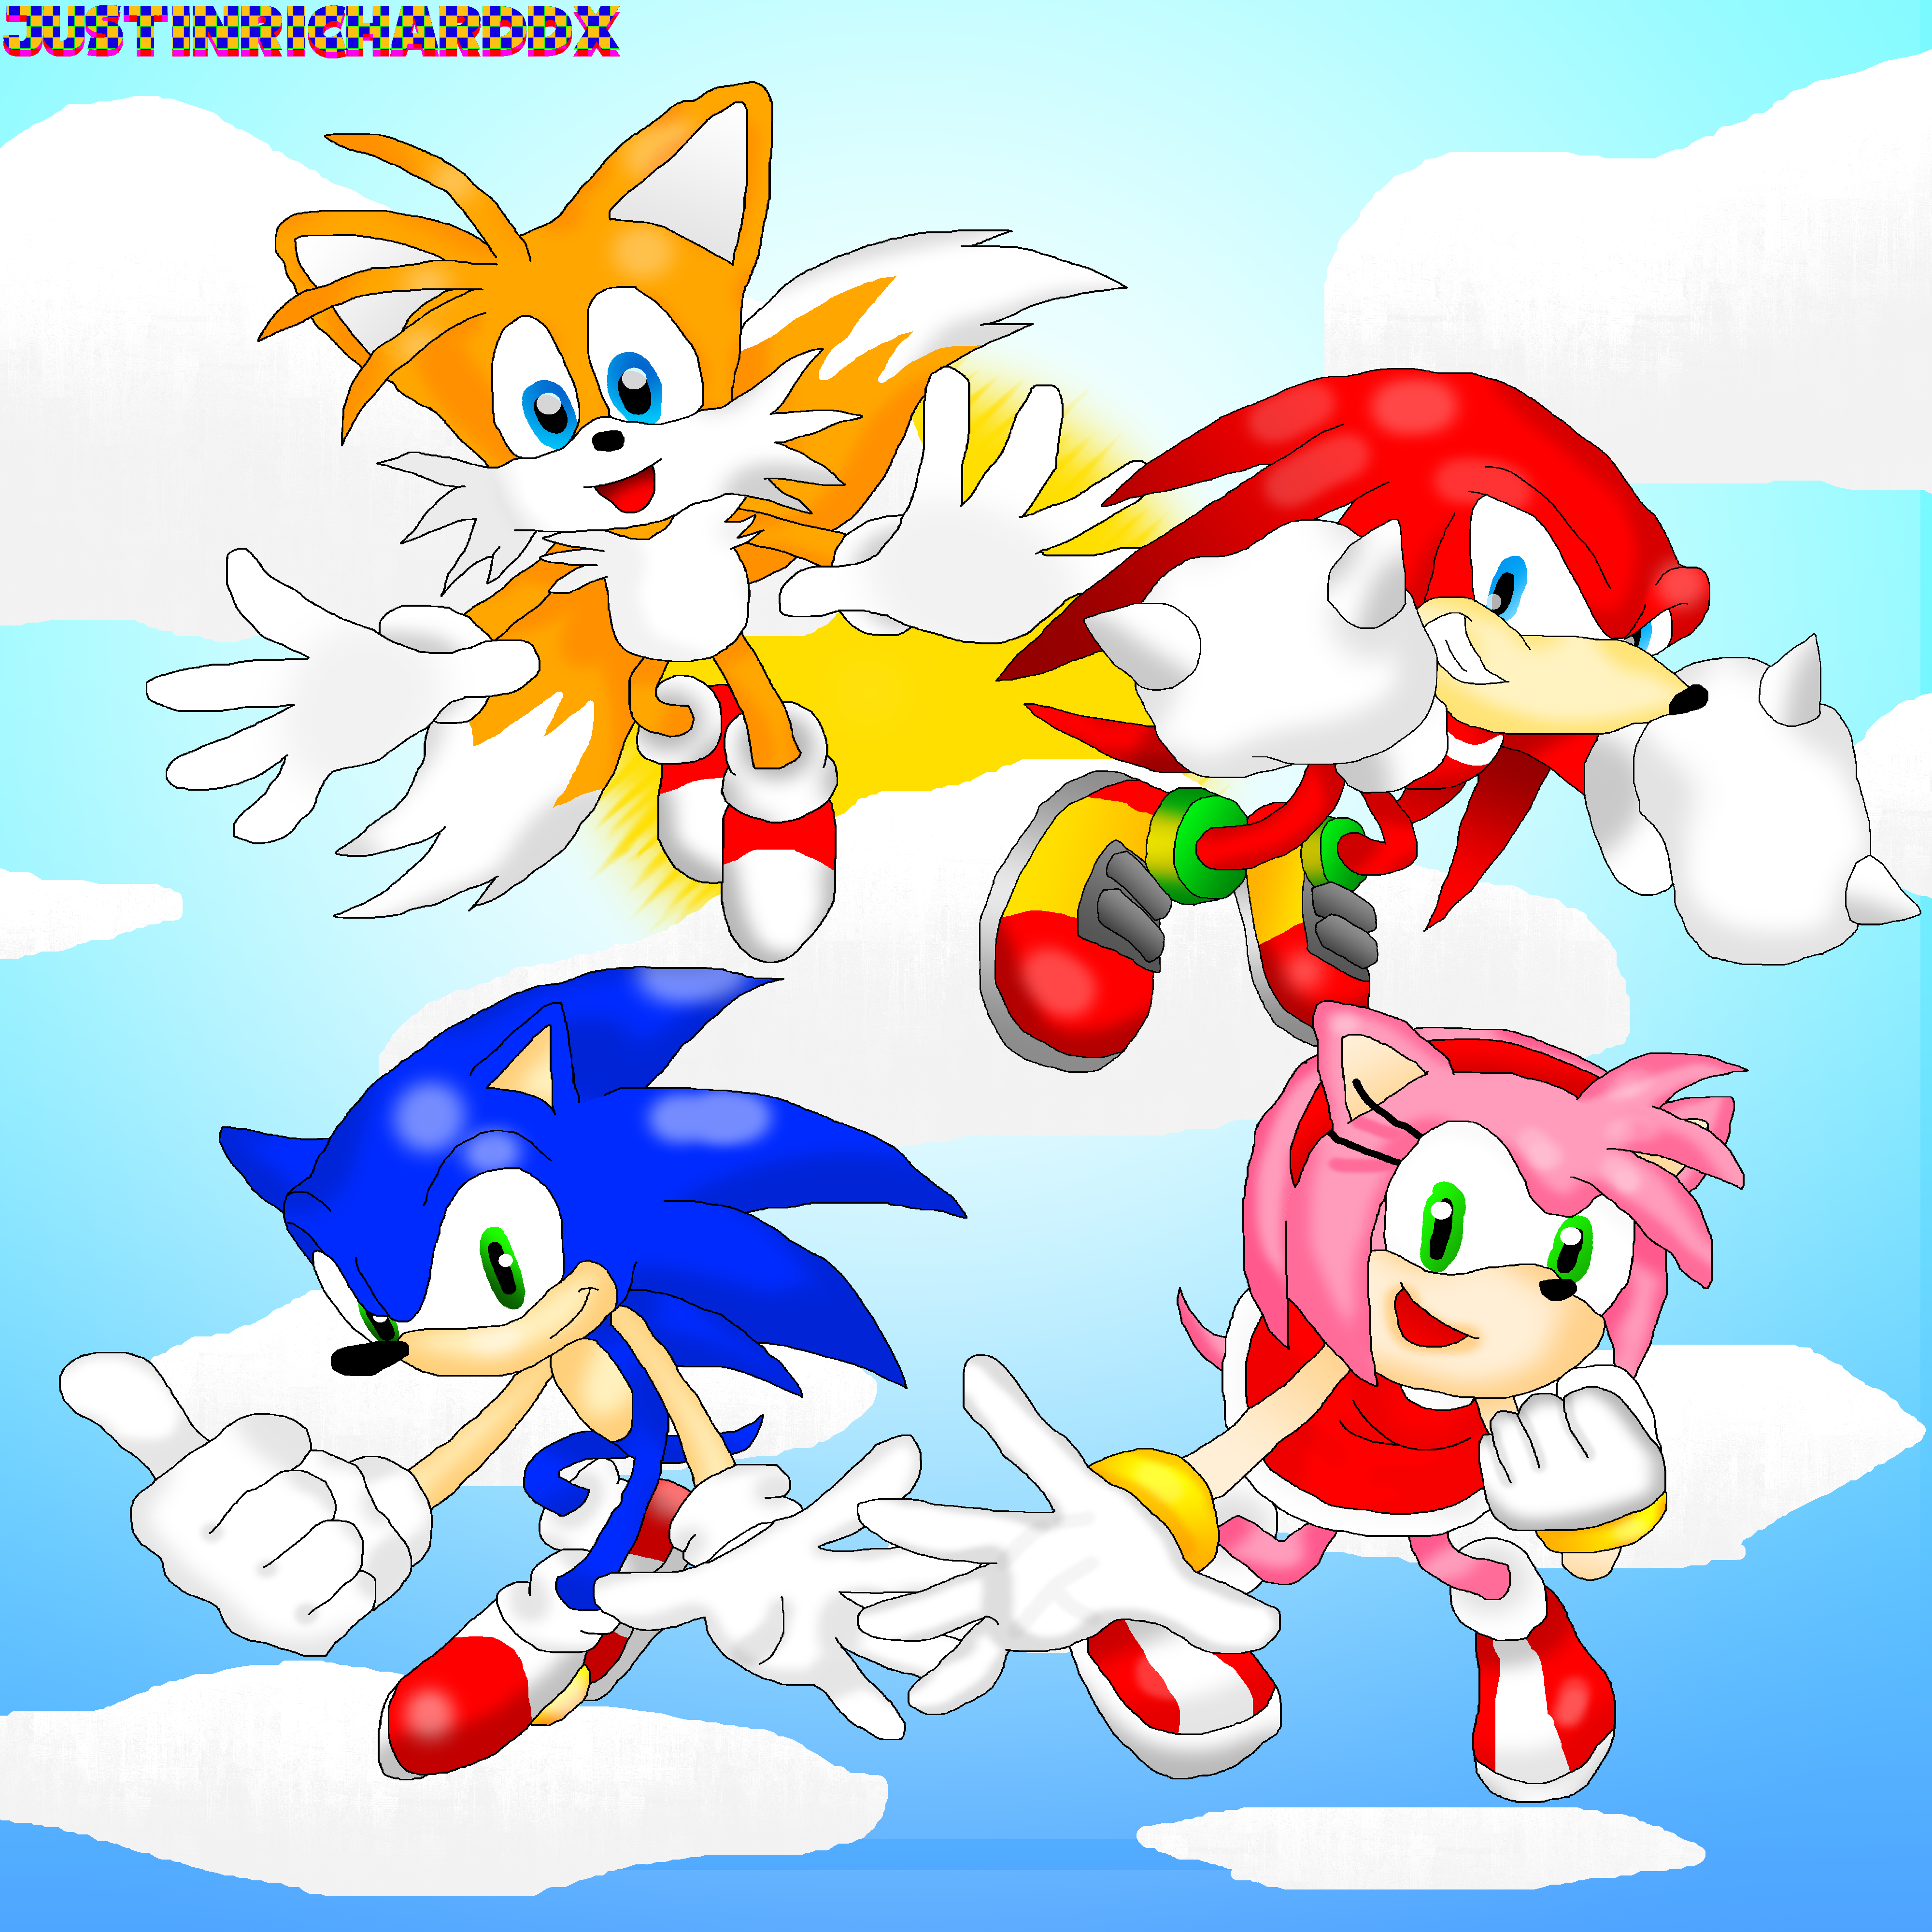 Sonic The Hedgeblog — 'Sonic Advance 4 Advanced' by OldGamerNewWorld